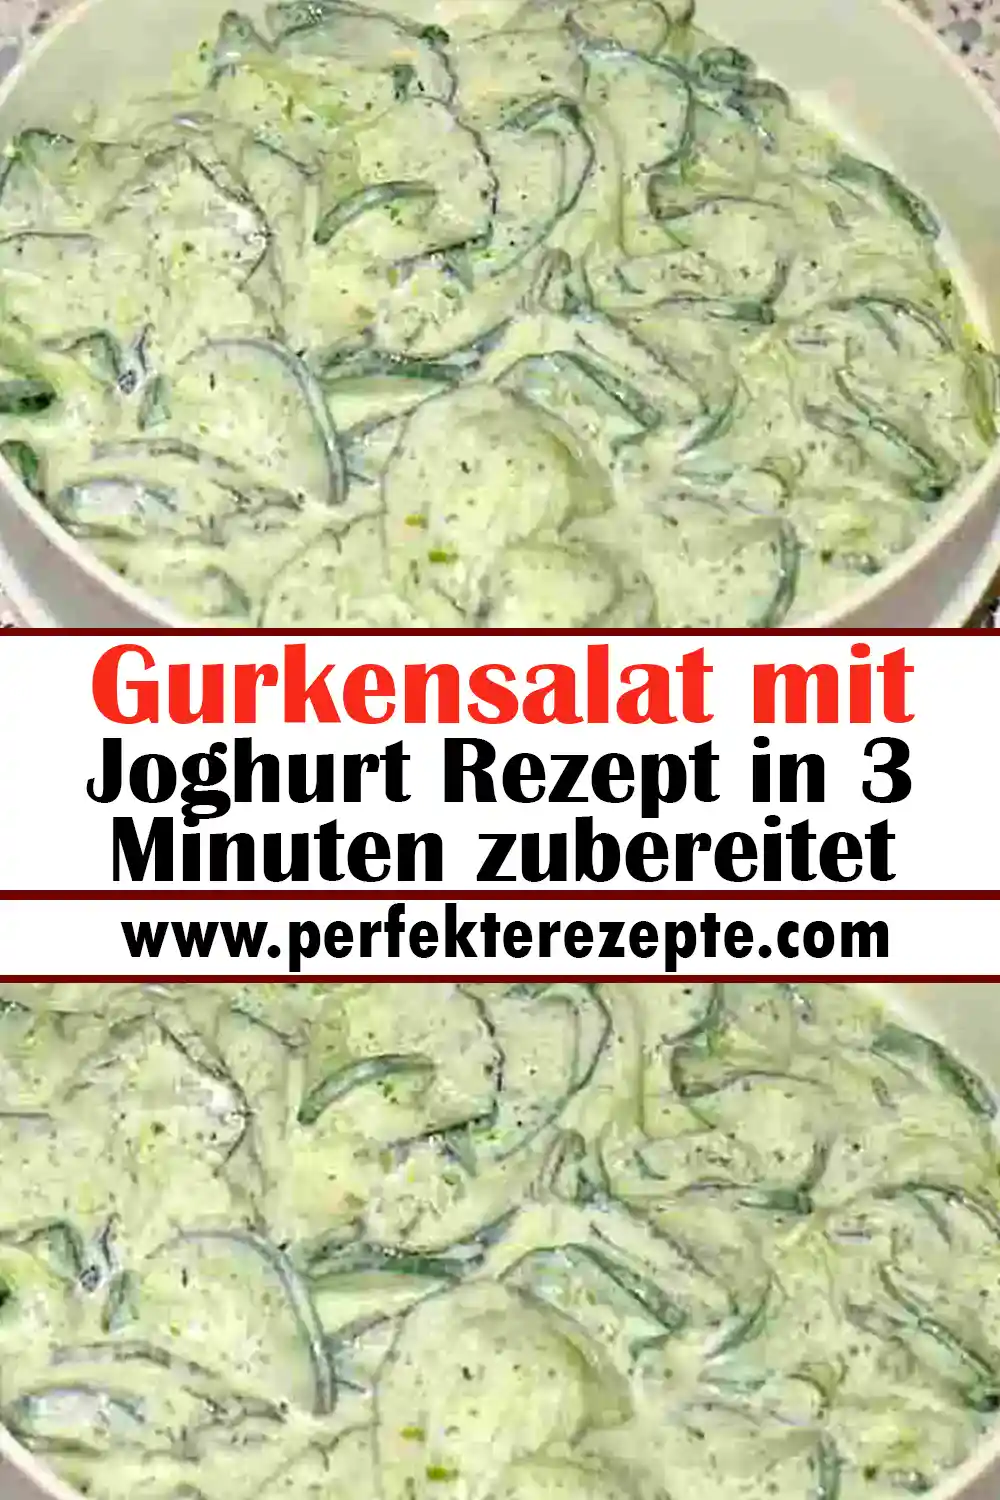 Gurkensalat mit Joghurt Rezept in 3 Minuten zubereitet